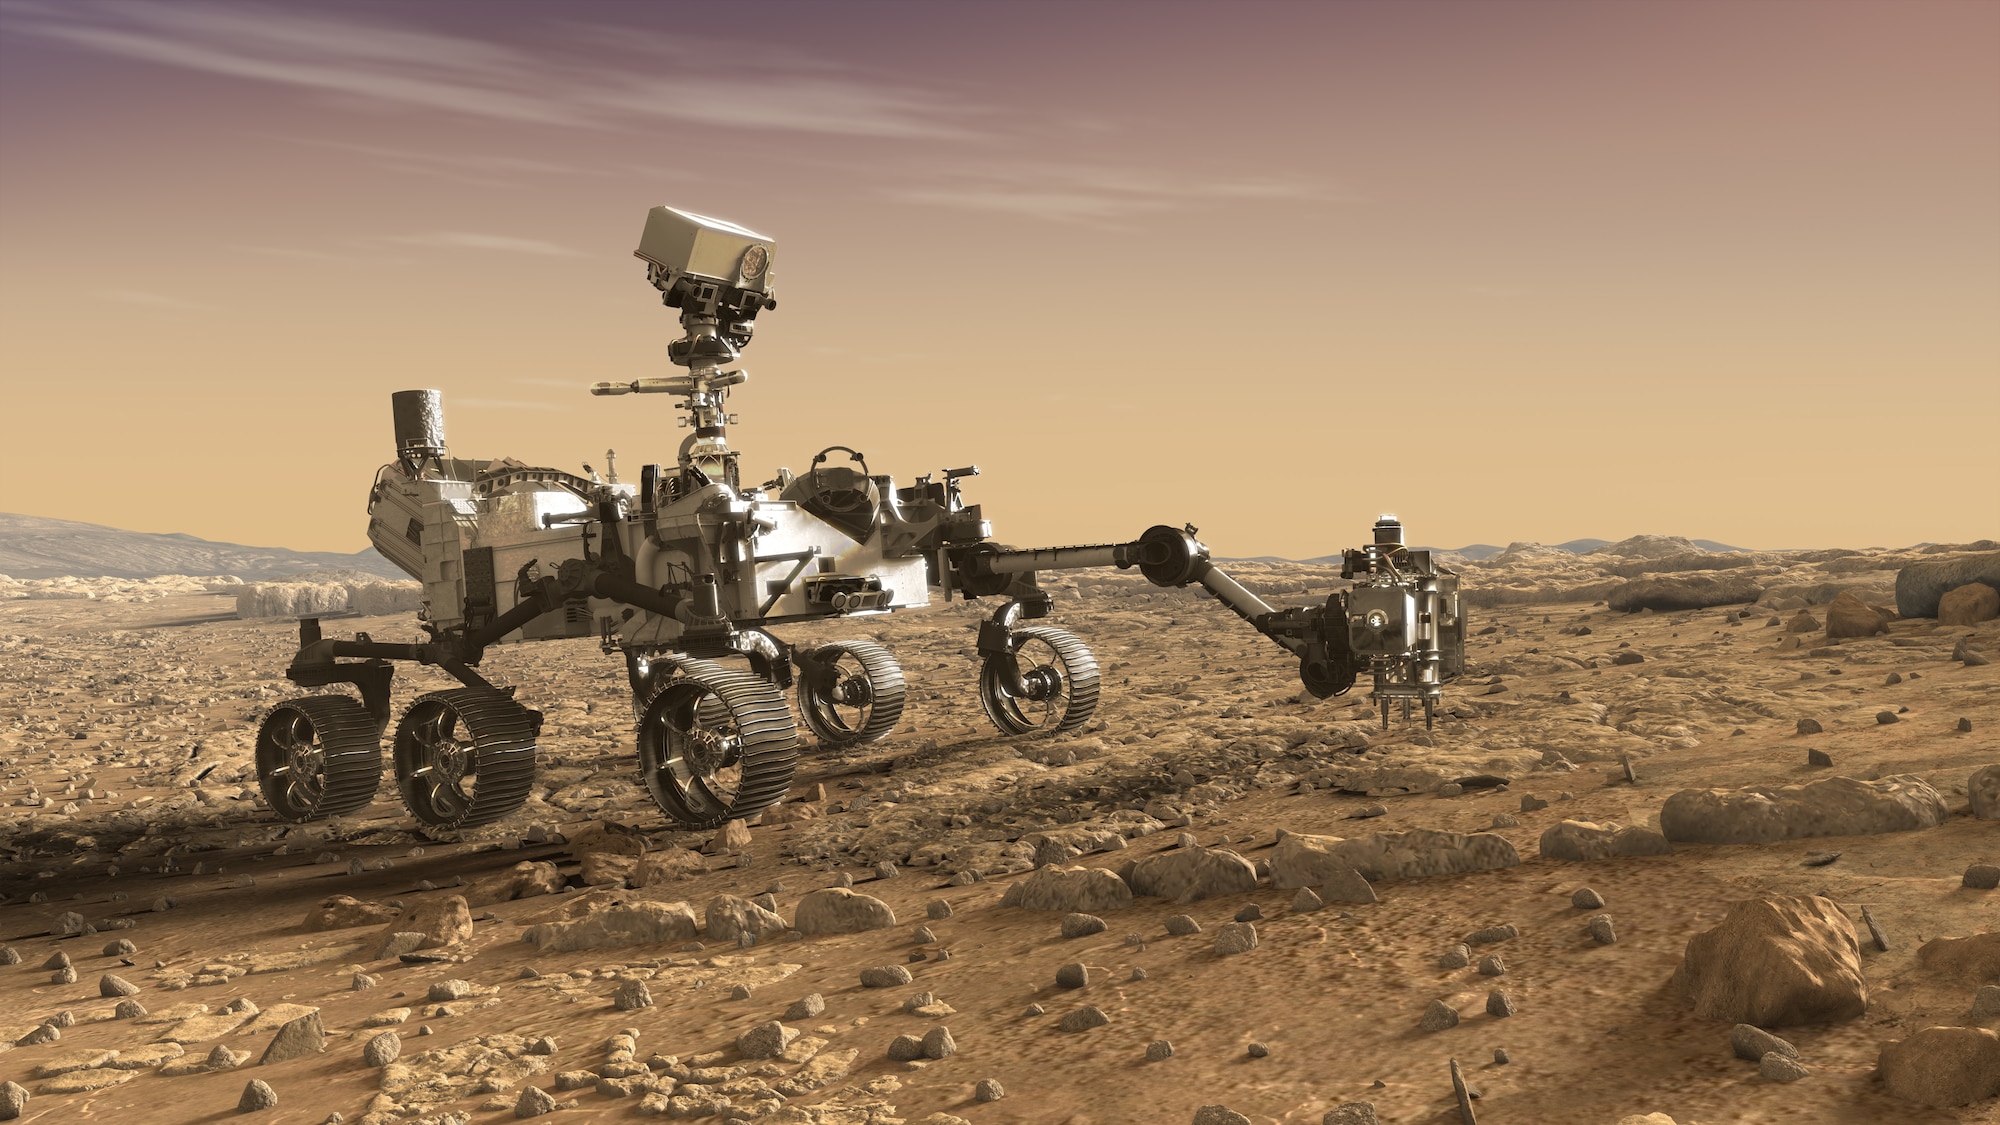 Mars 2020 rover arist rendition